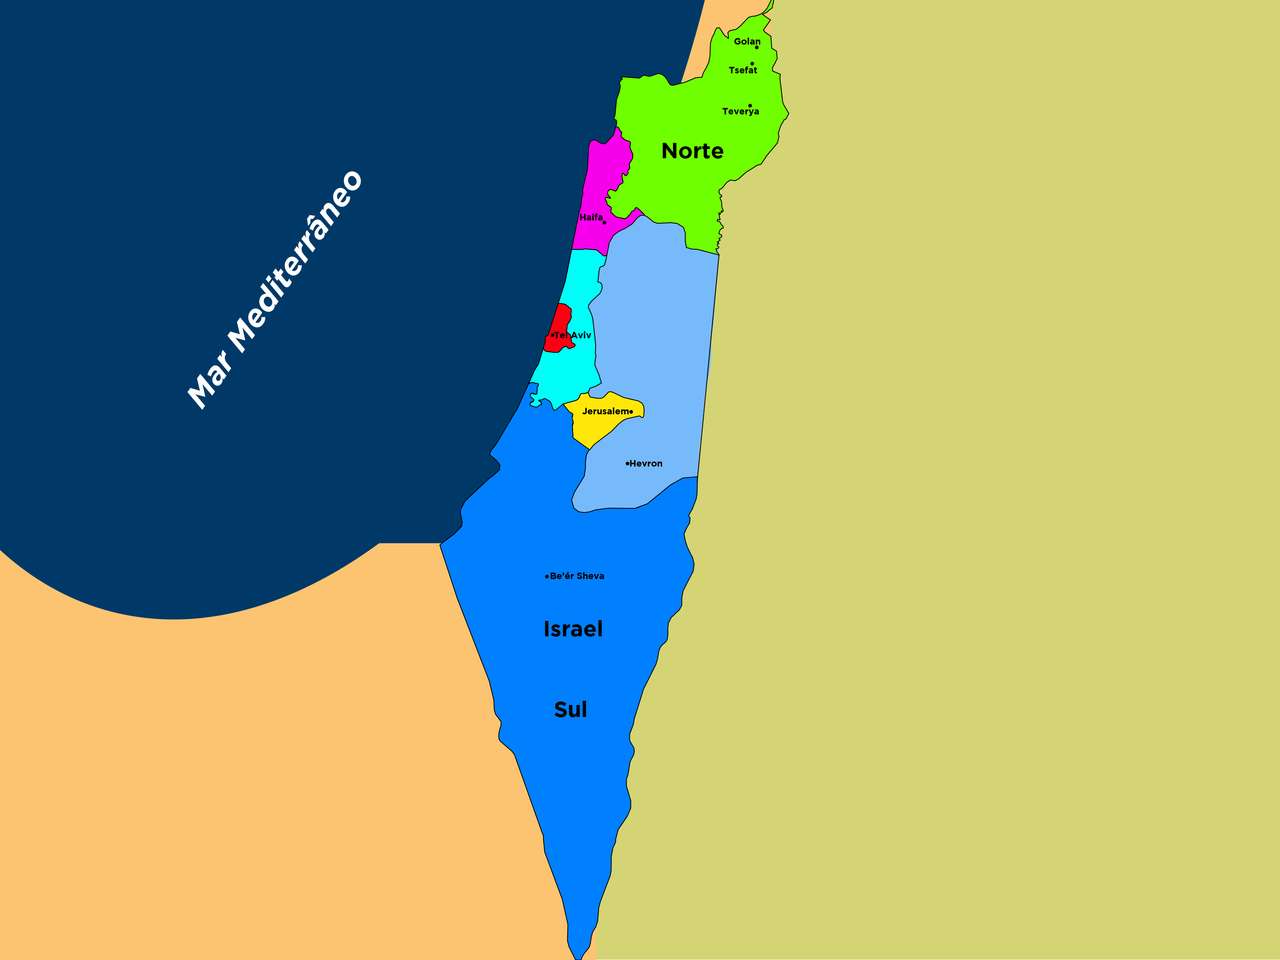 Mappa di Israele puzzle online